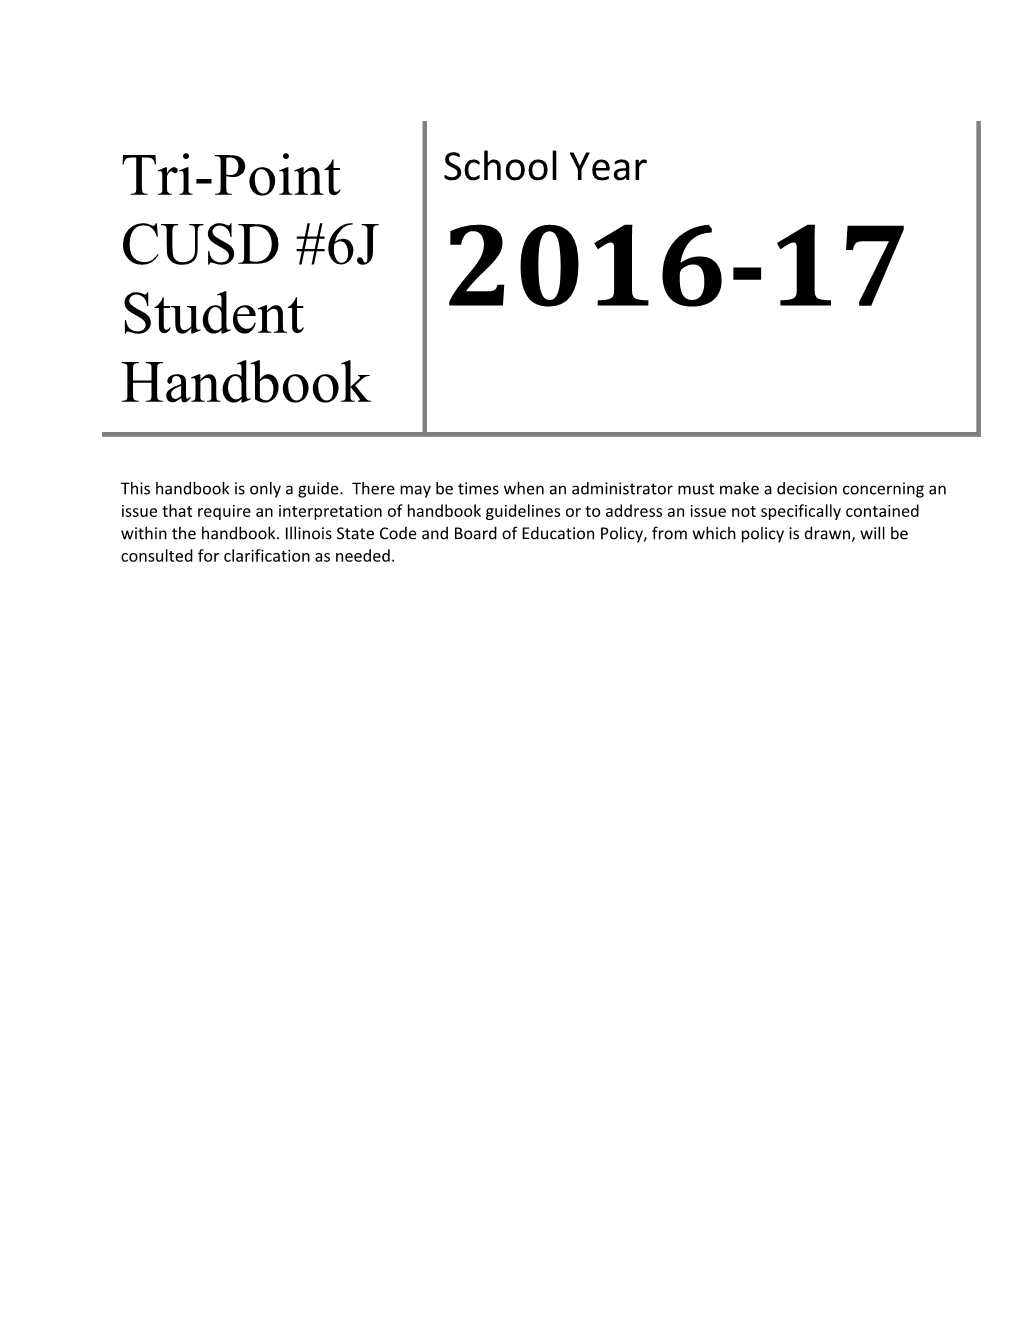 Tri-Point CUSD #6J Student Handbook